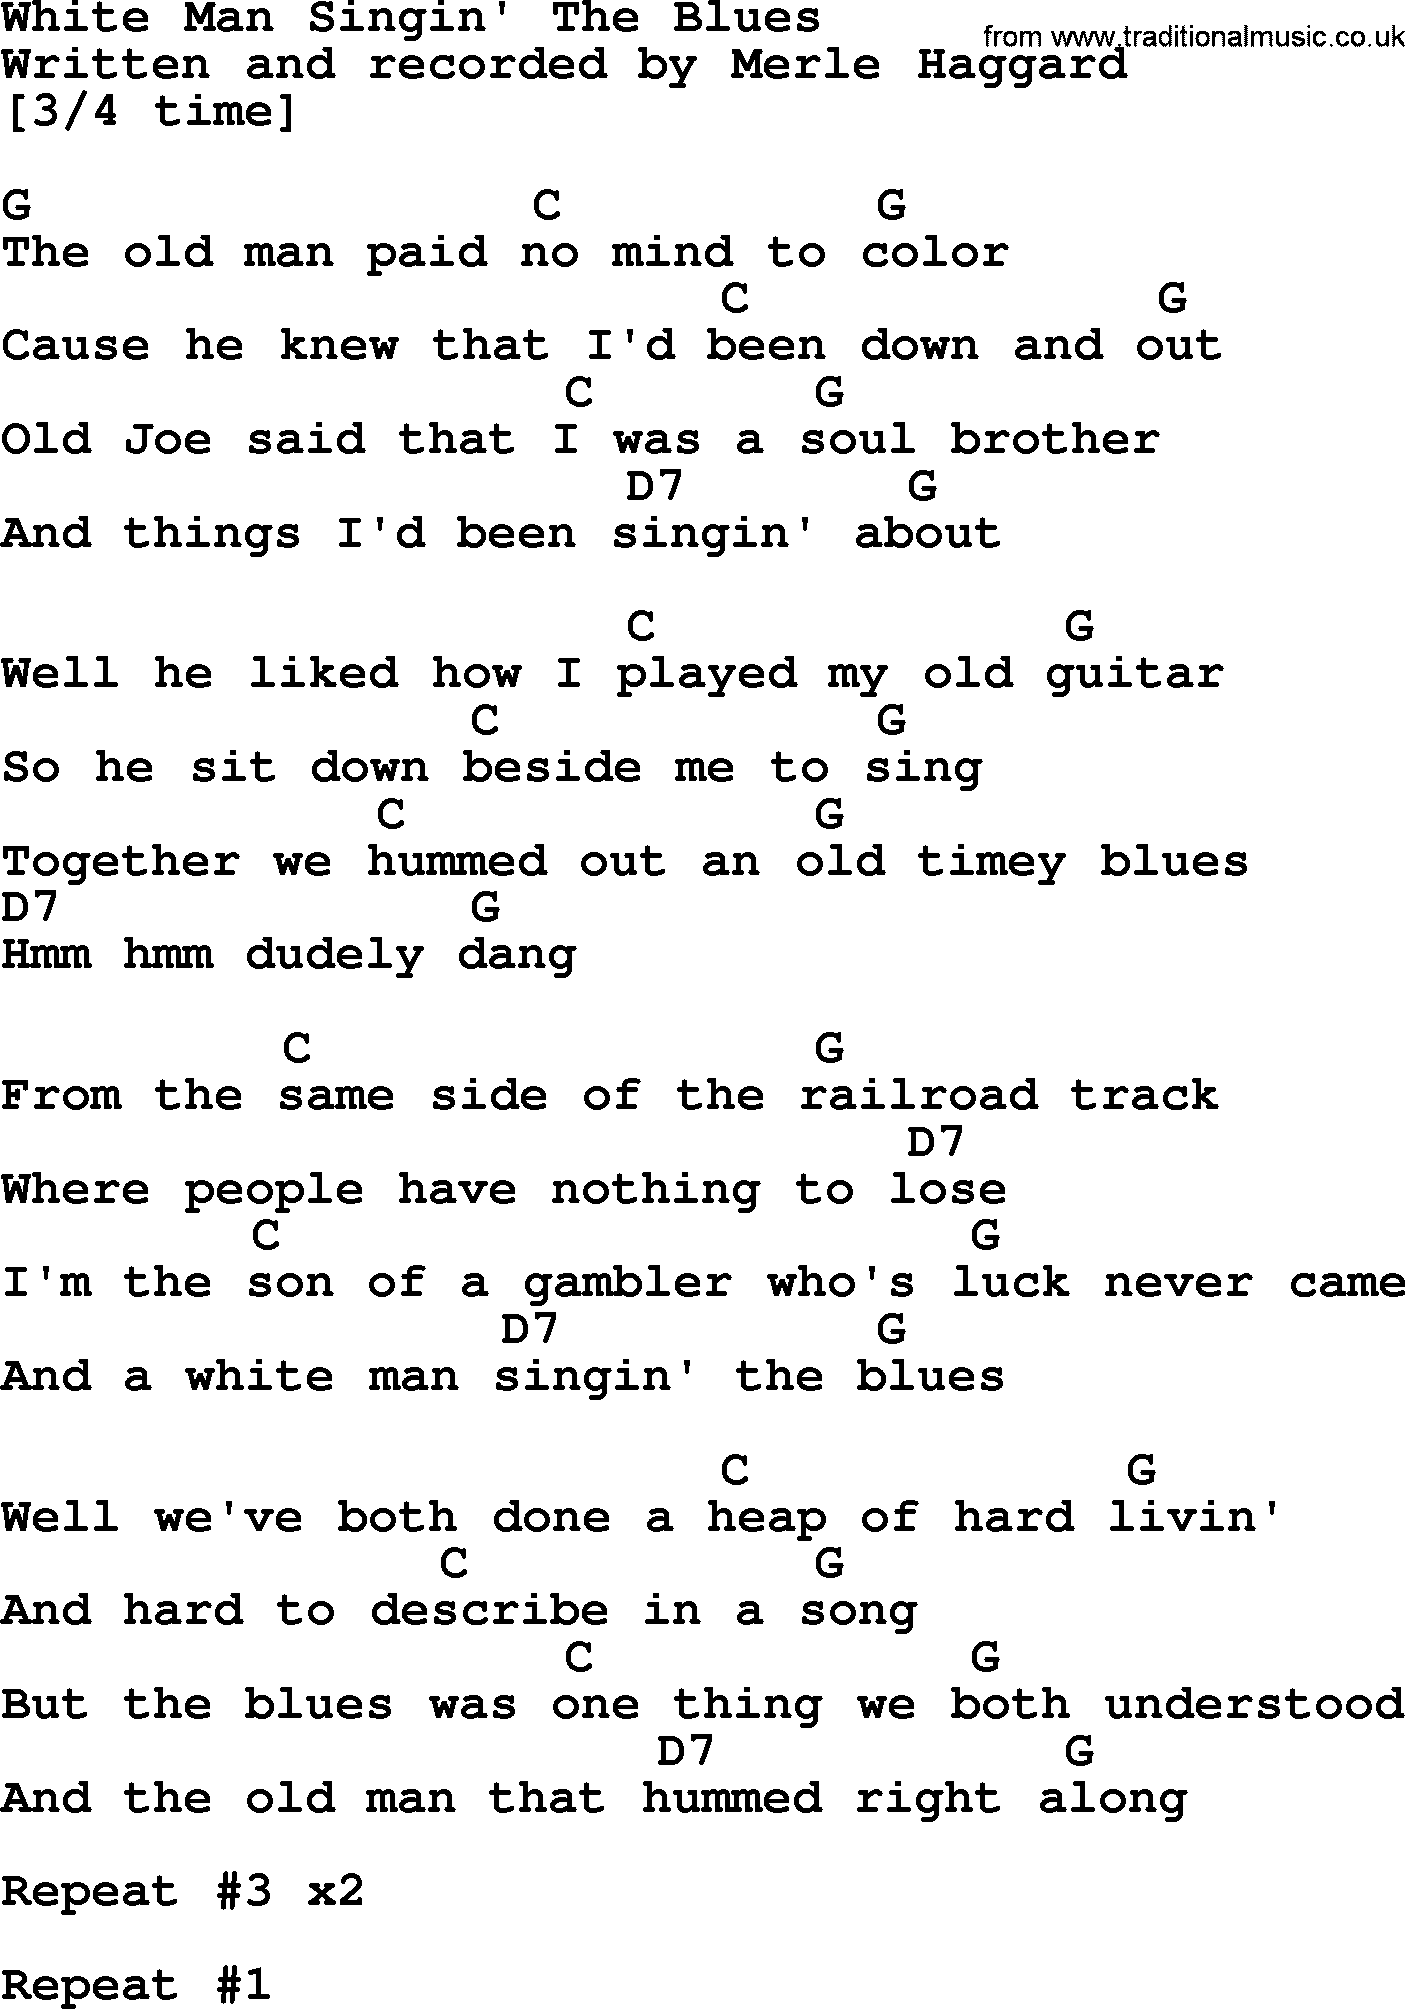 Merle Haggard song: White Man Singin' The Blues, lyrics and chords